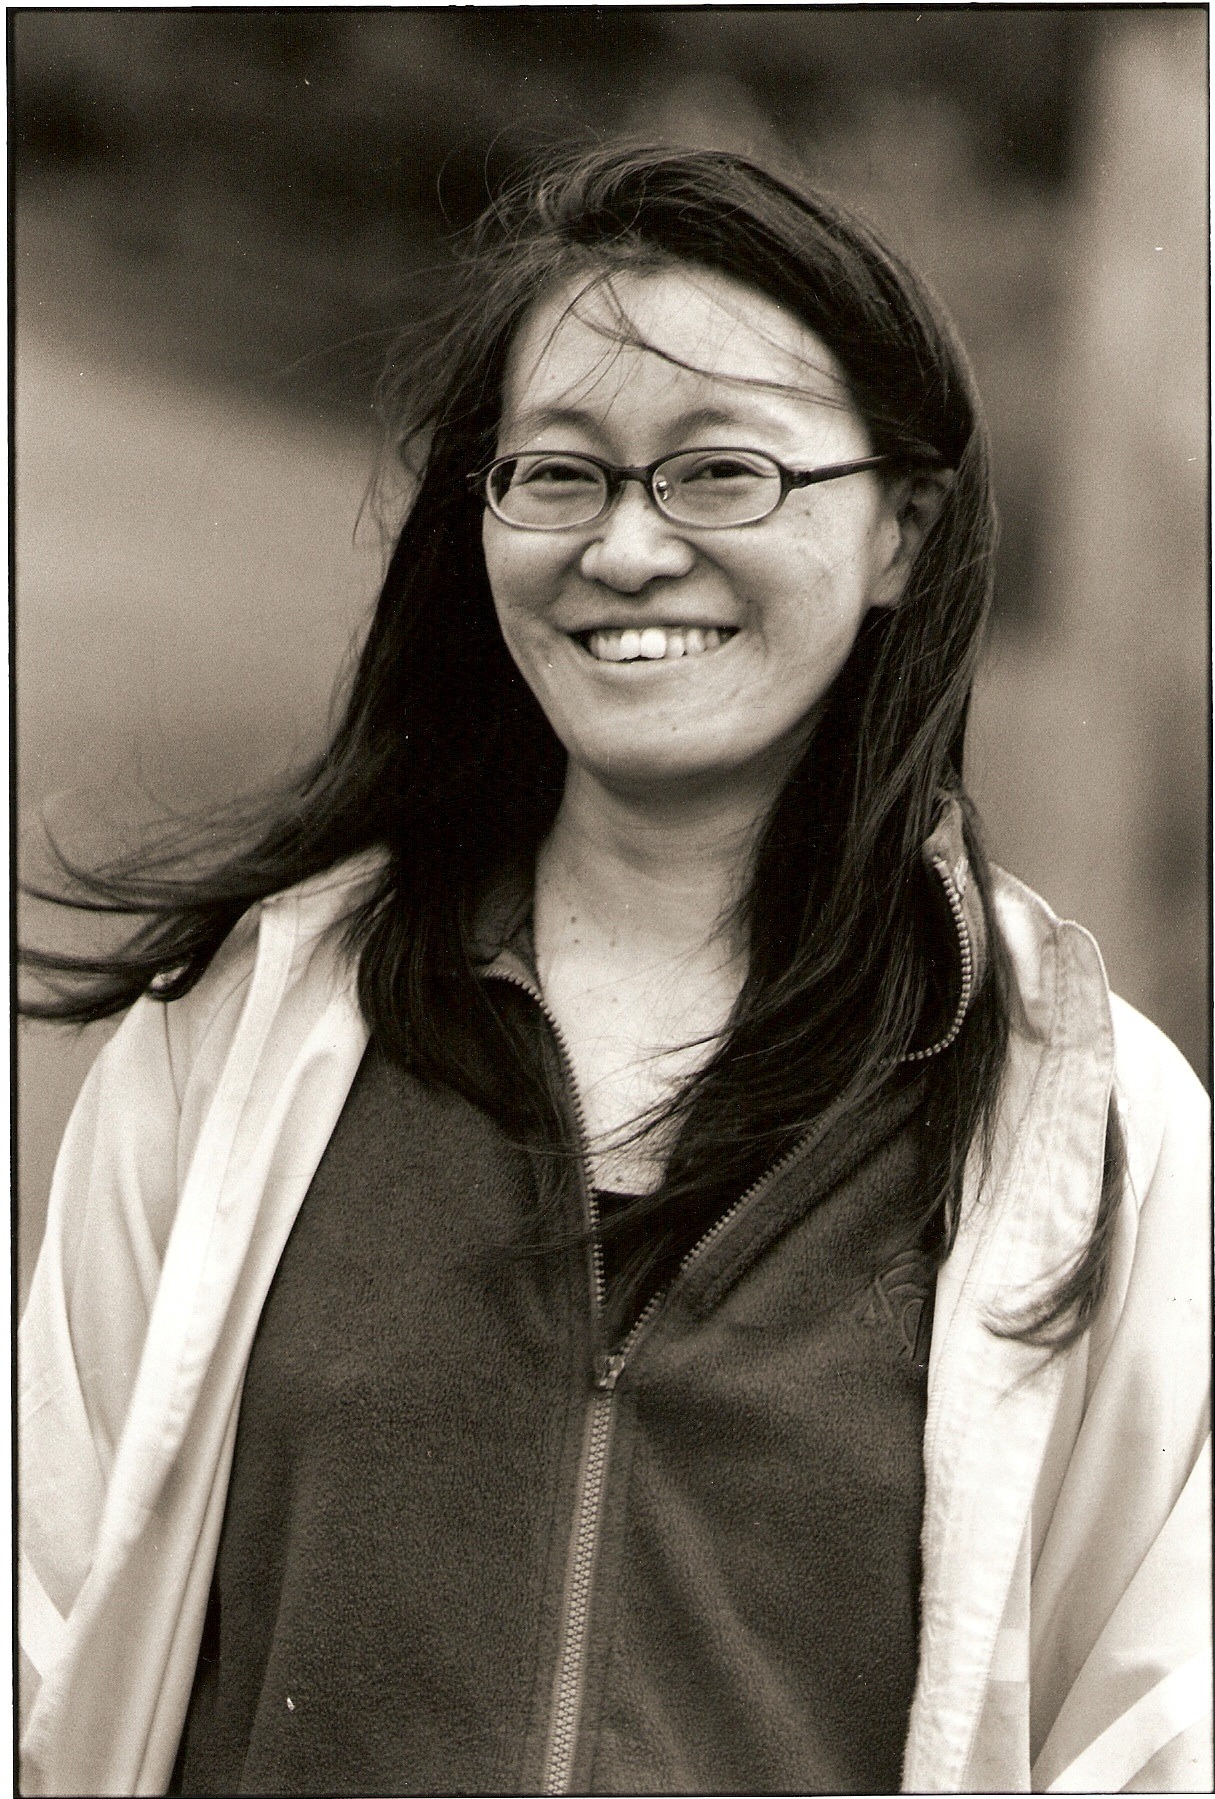 Author photo of Rita Wong.